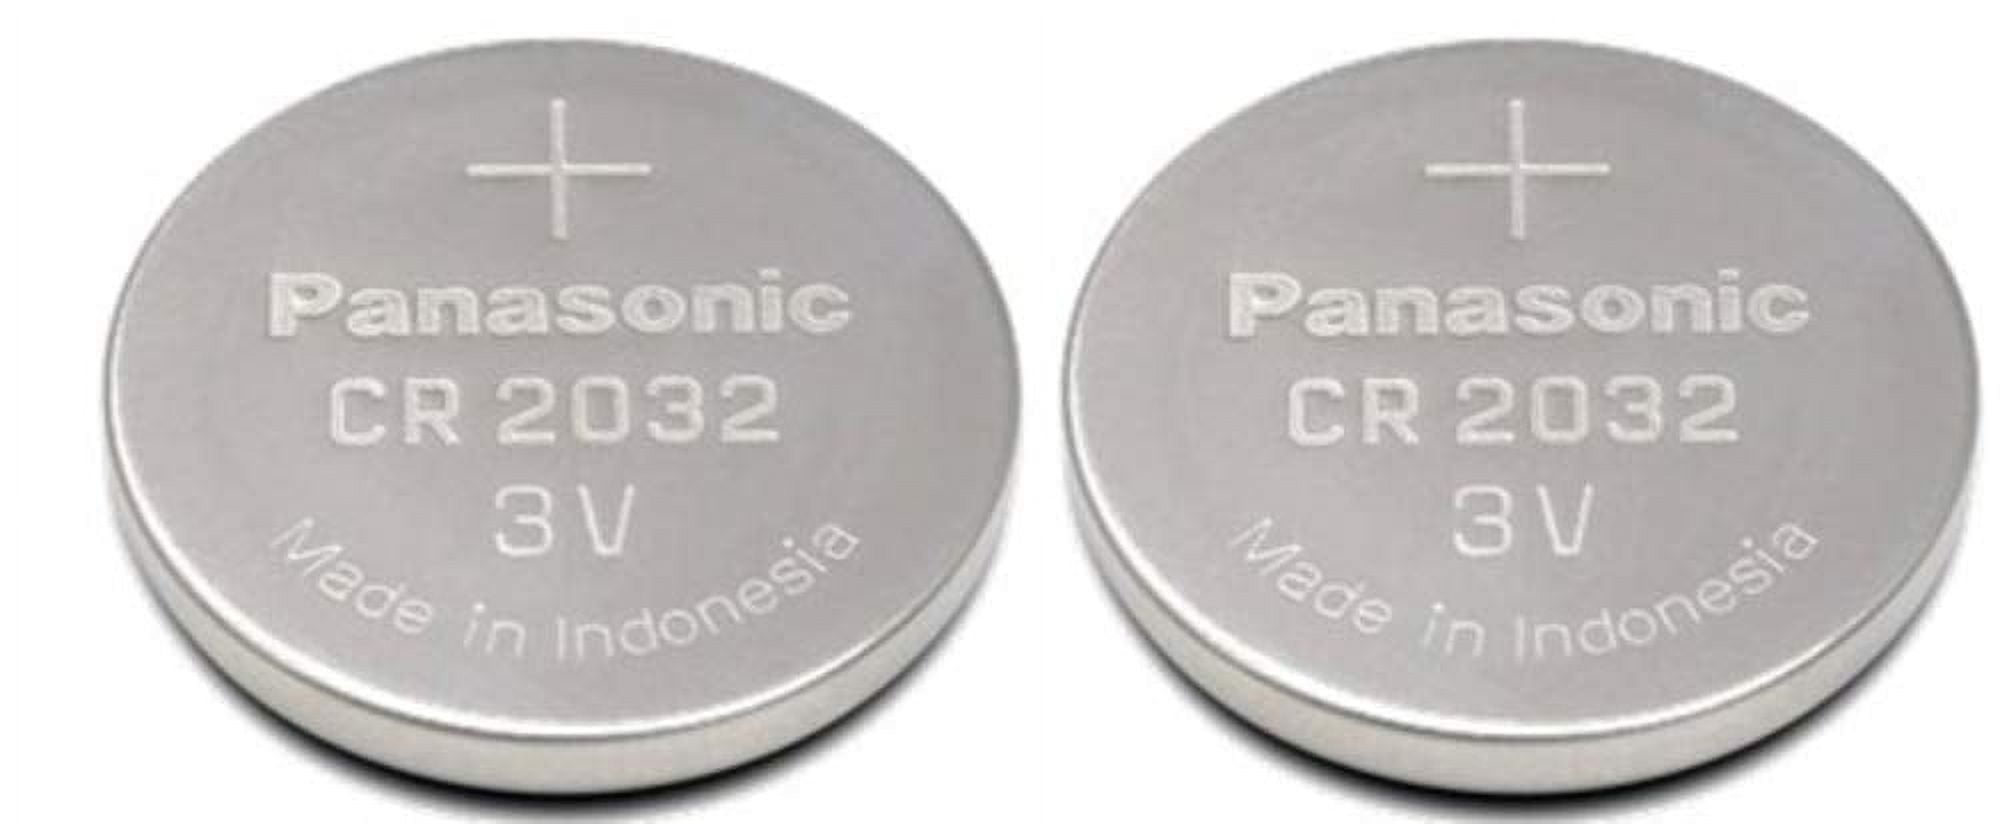 COIN BATTERY PANASONIC CR-2032 PACK 1